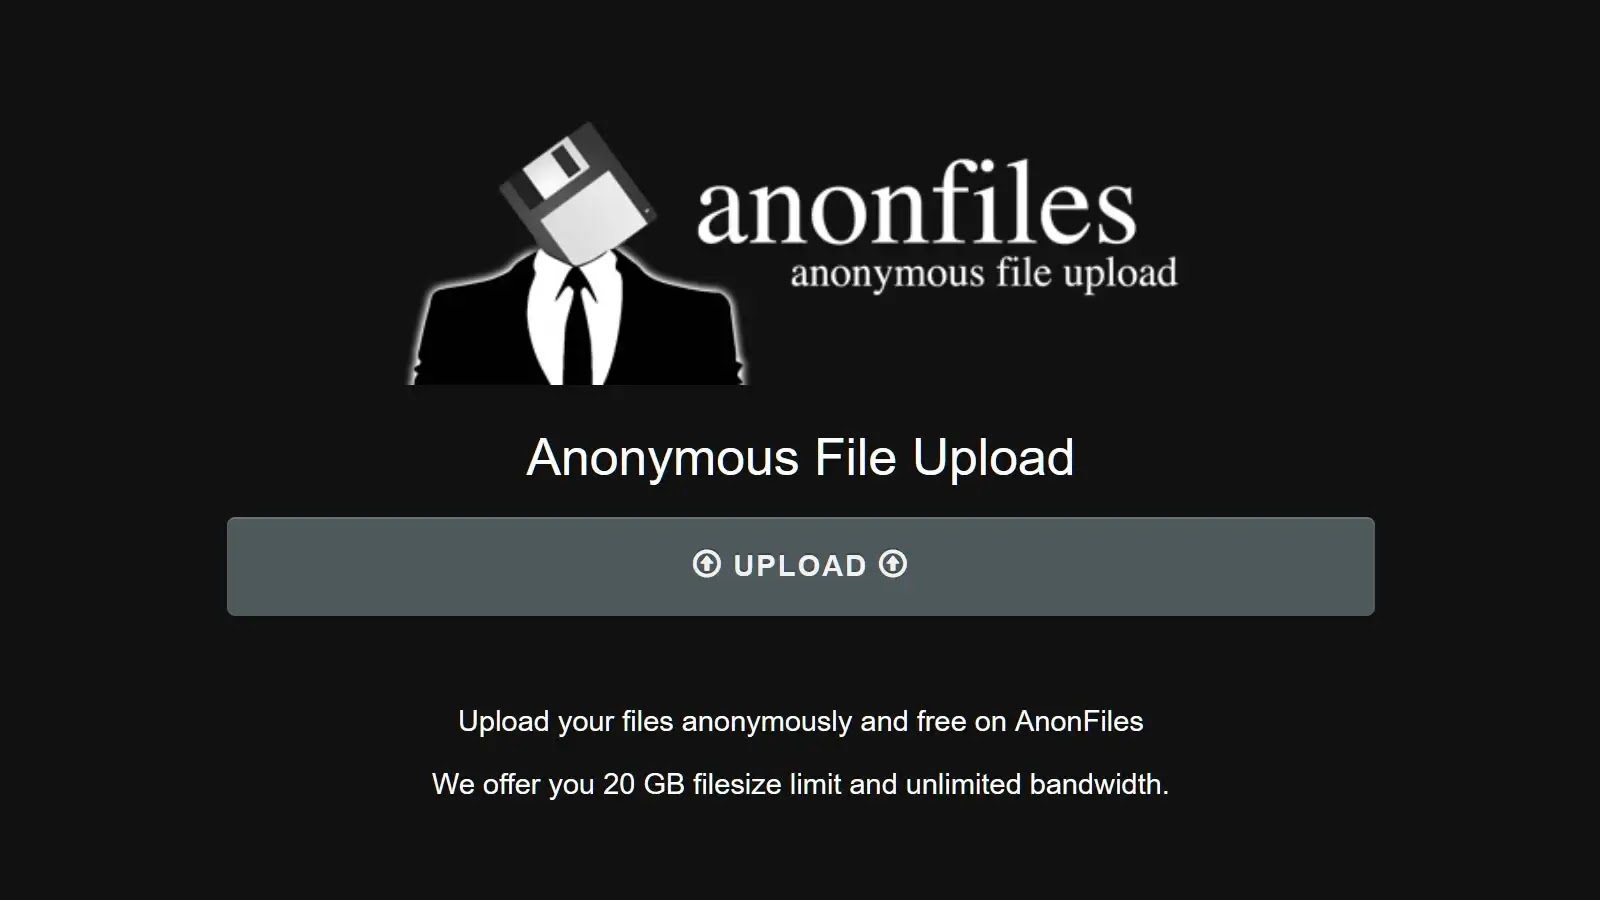 Anonfiles cerró operaciones